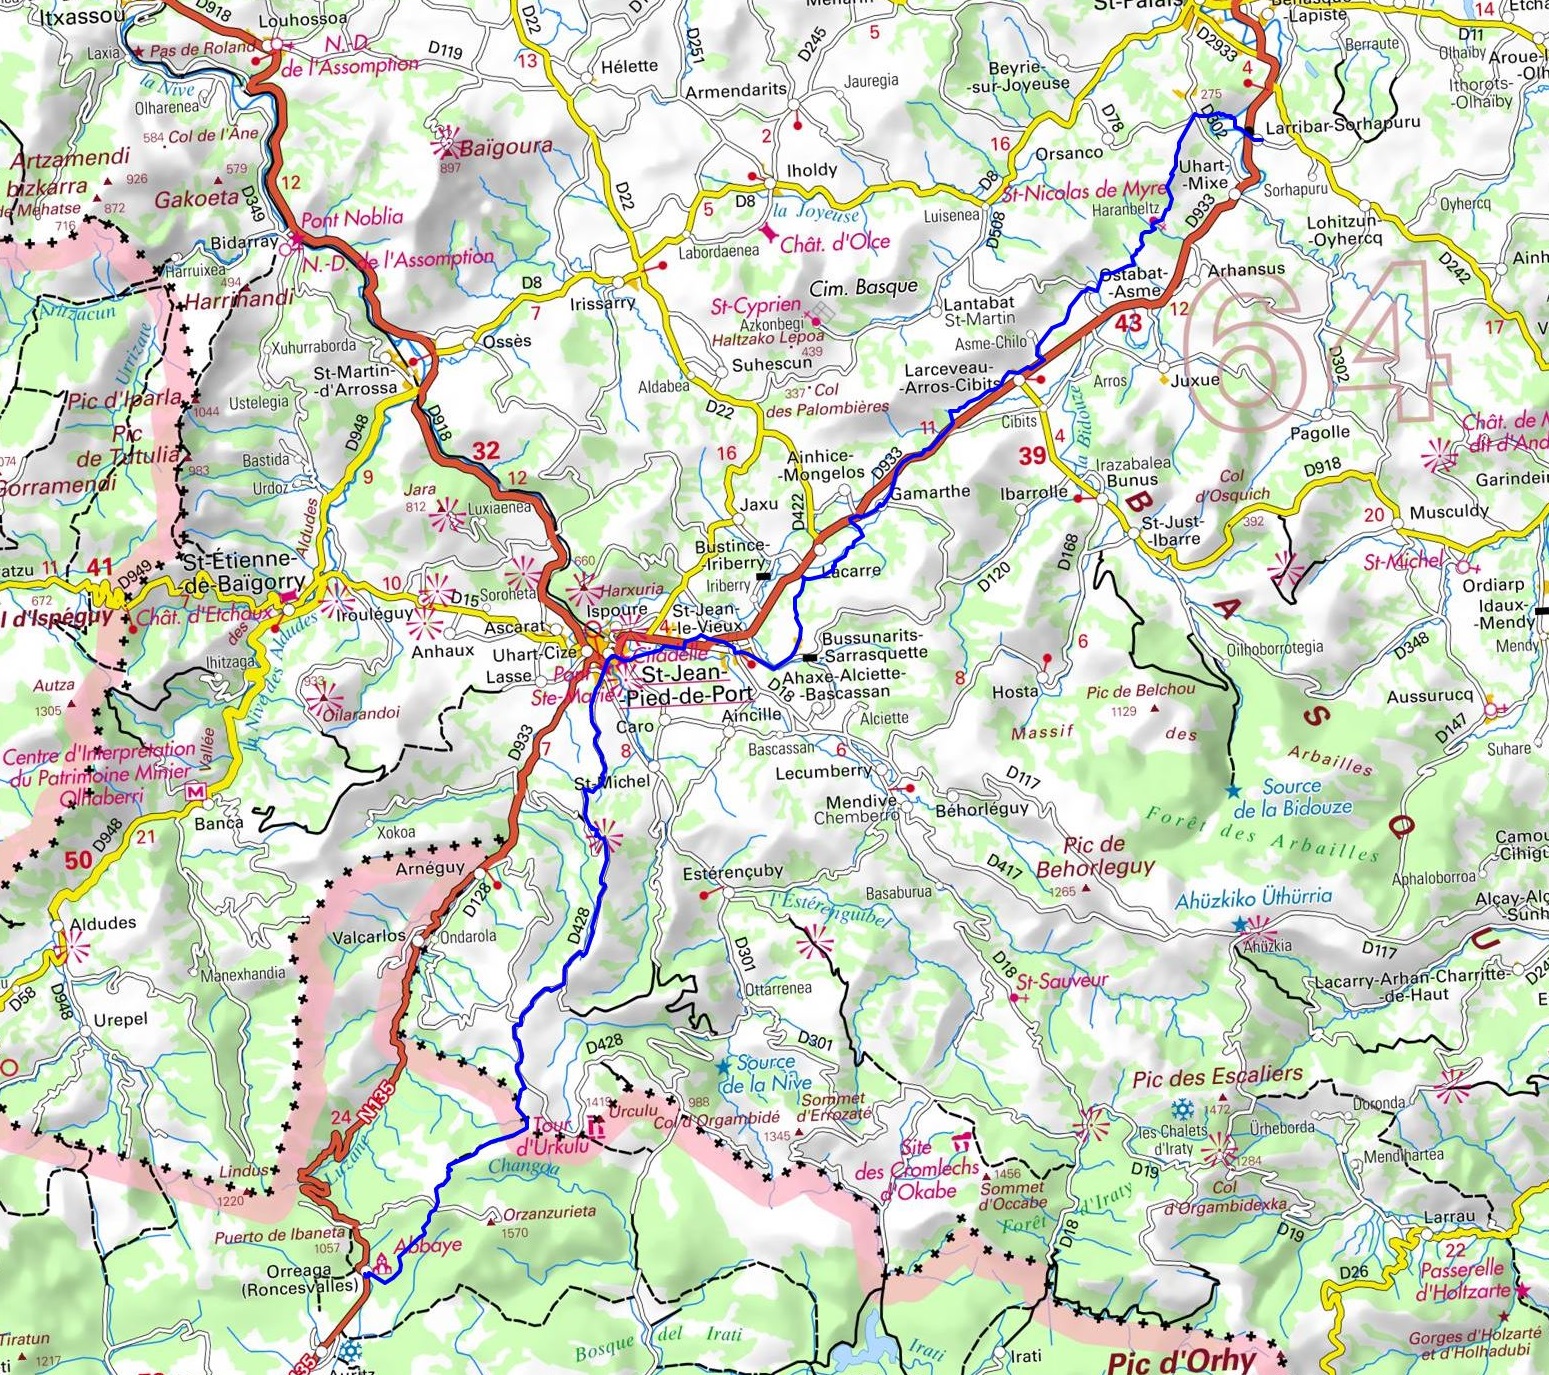 GR65 Hiking from Larribar-Sorhapuru (Pyrenees-Atlantiques) to Roncesvalles (Spain) 1